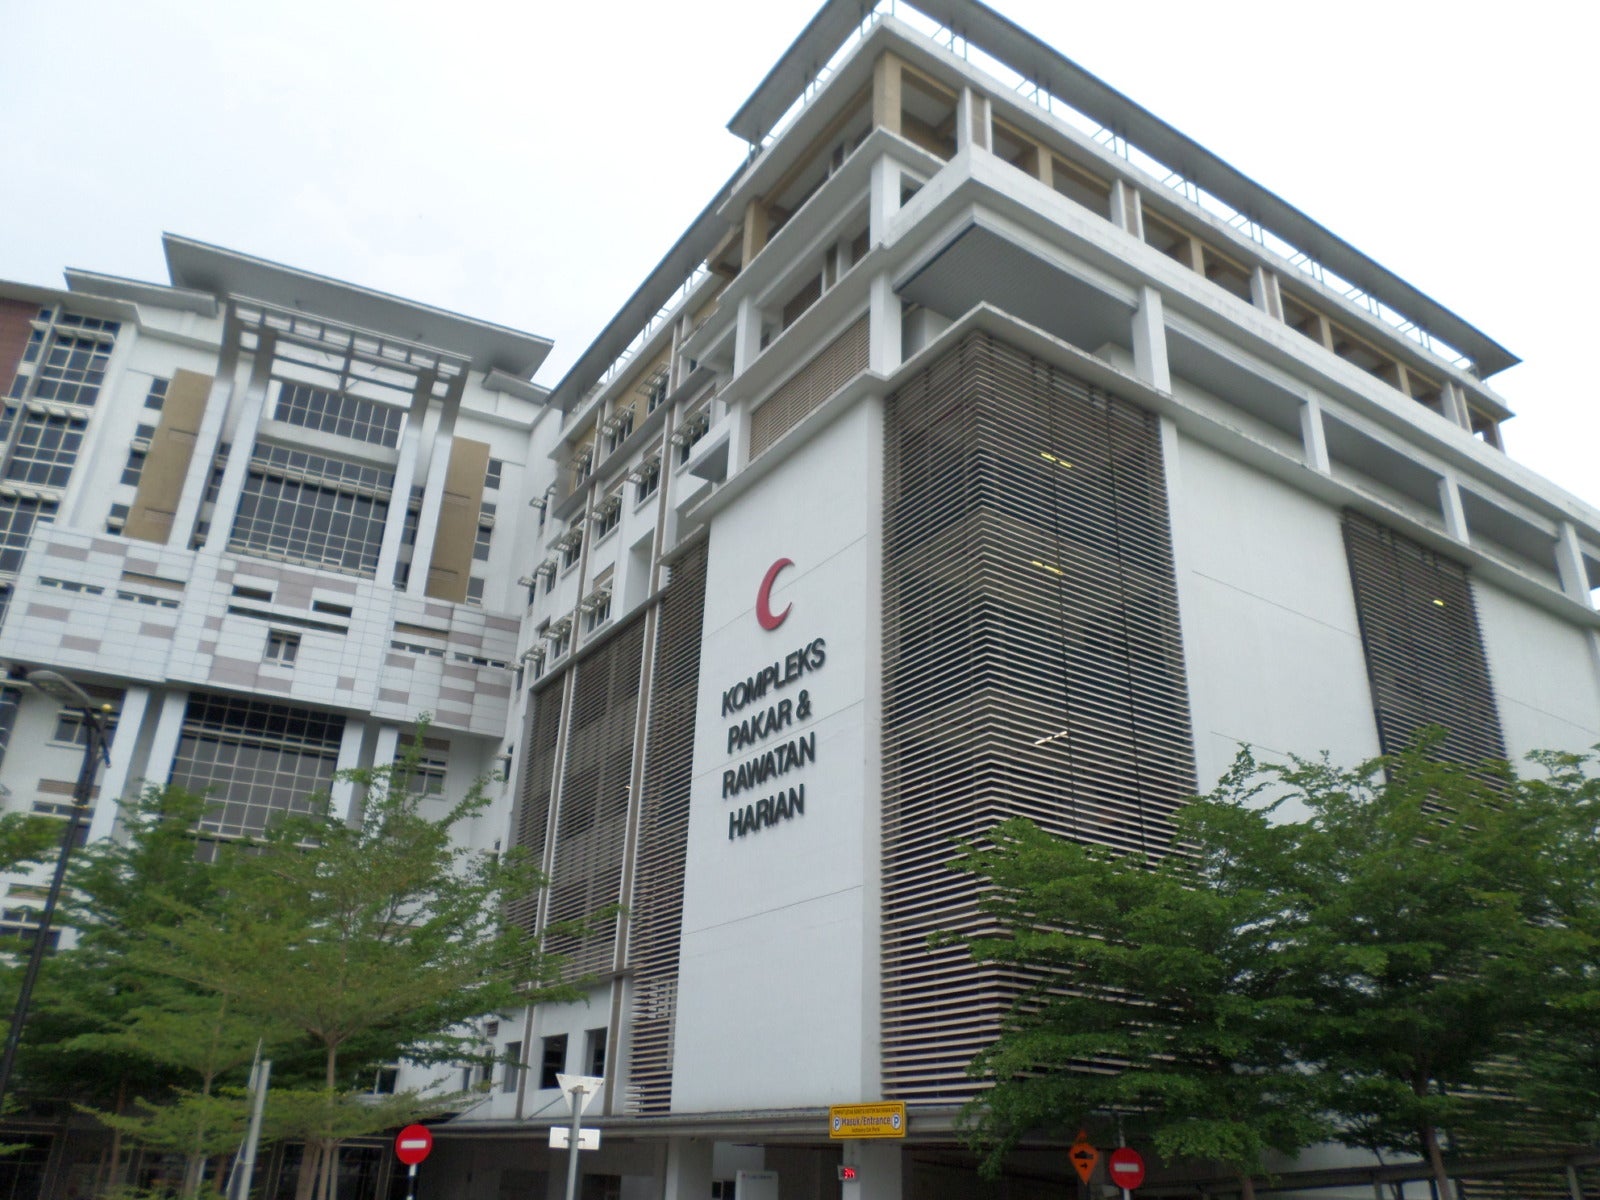 Kuala Lumpur Hospital